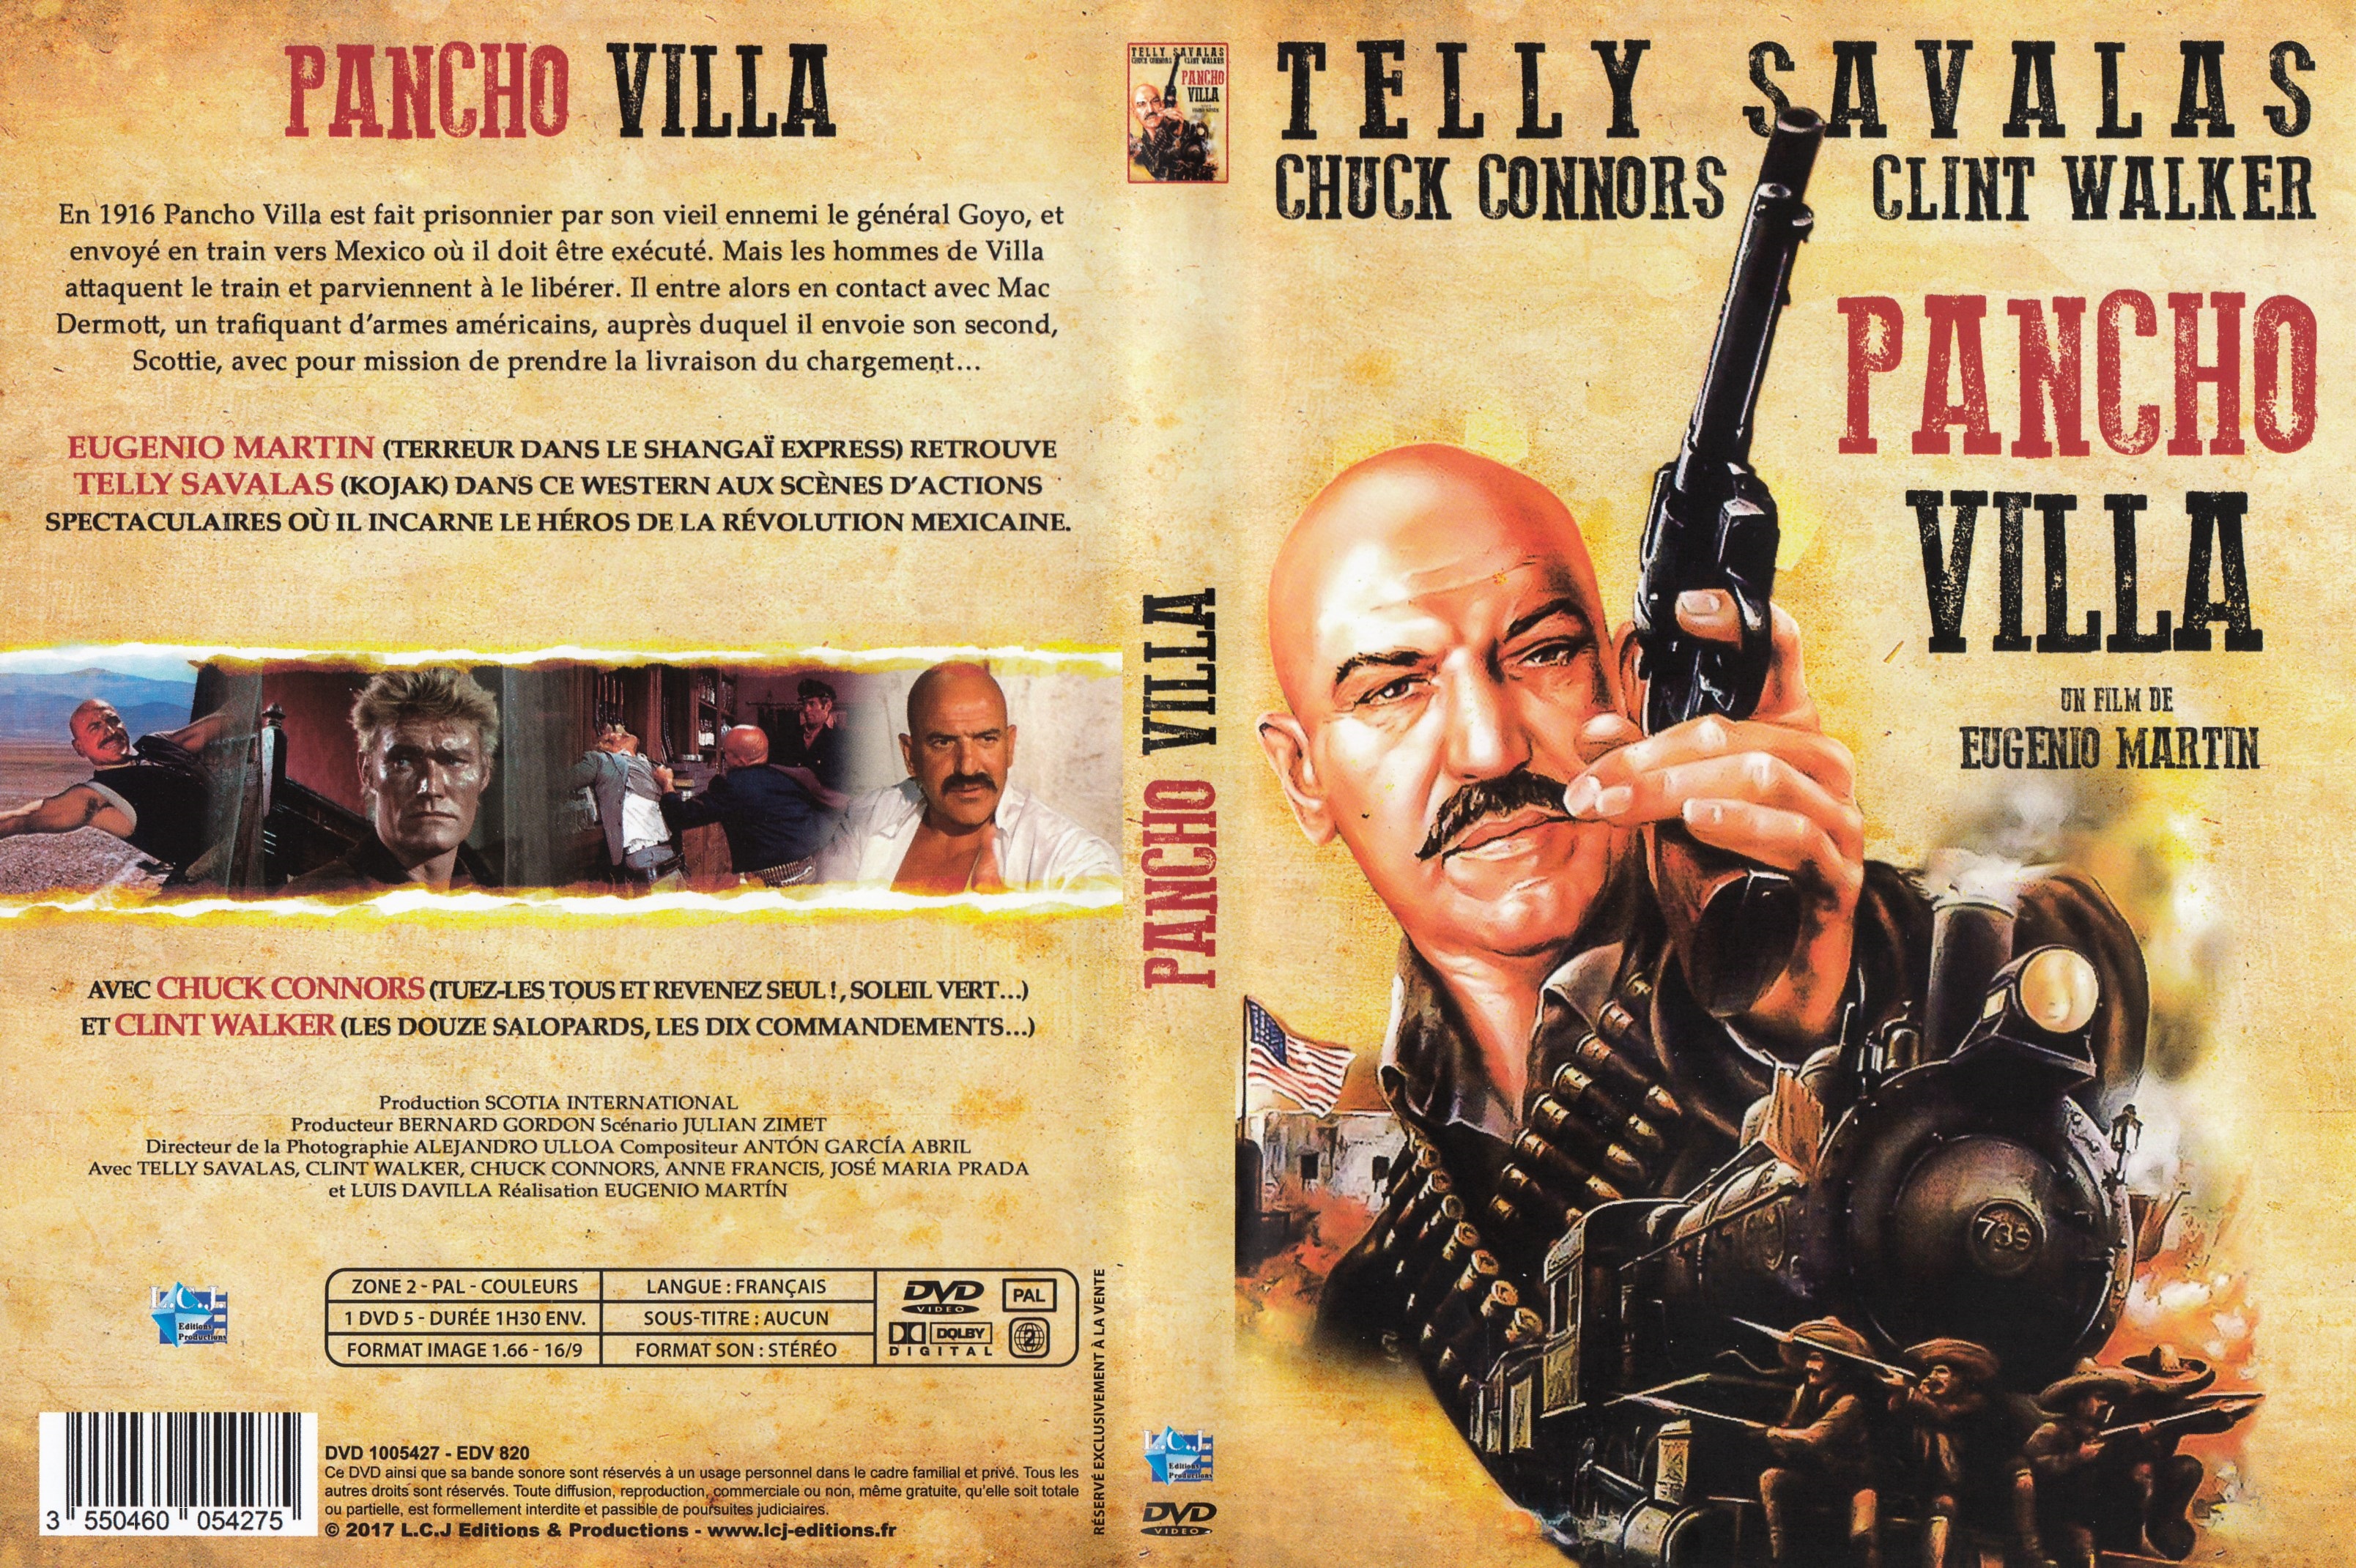 Jaquette DVD Pancho Villa (1974) v2